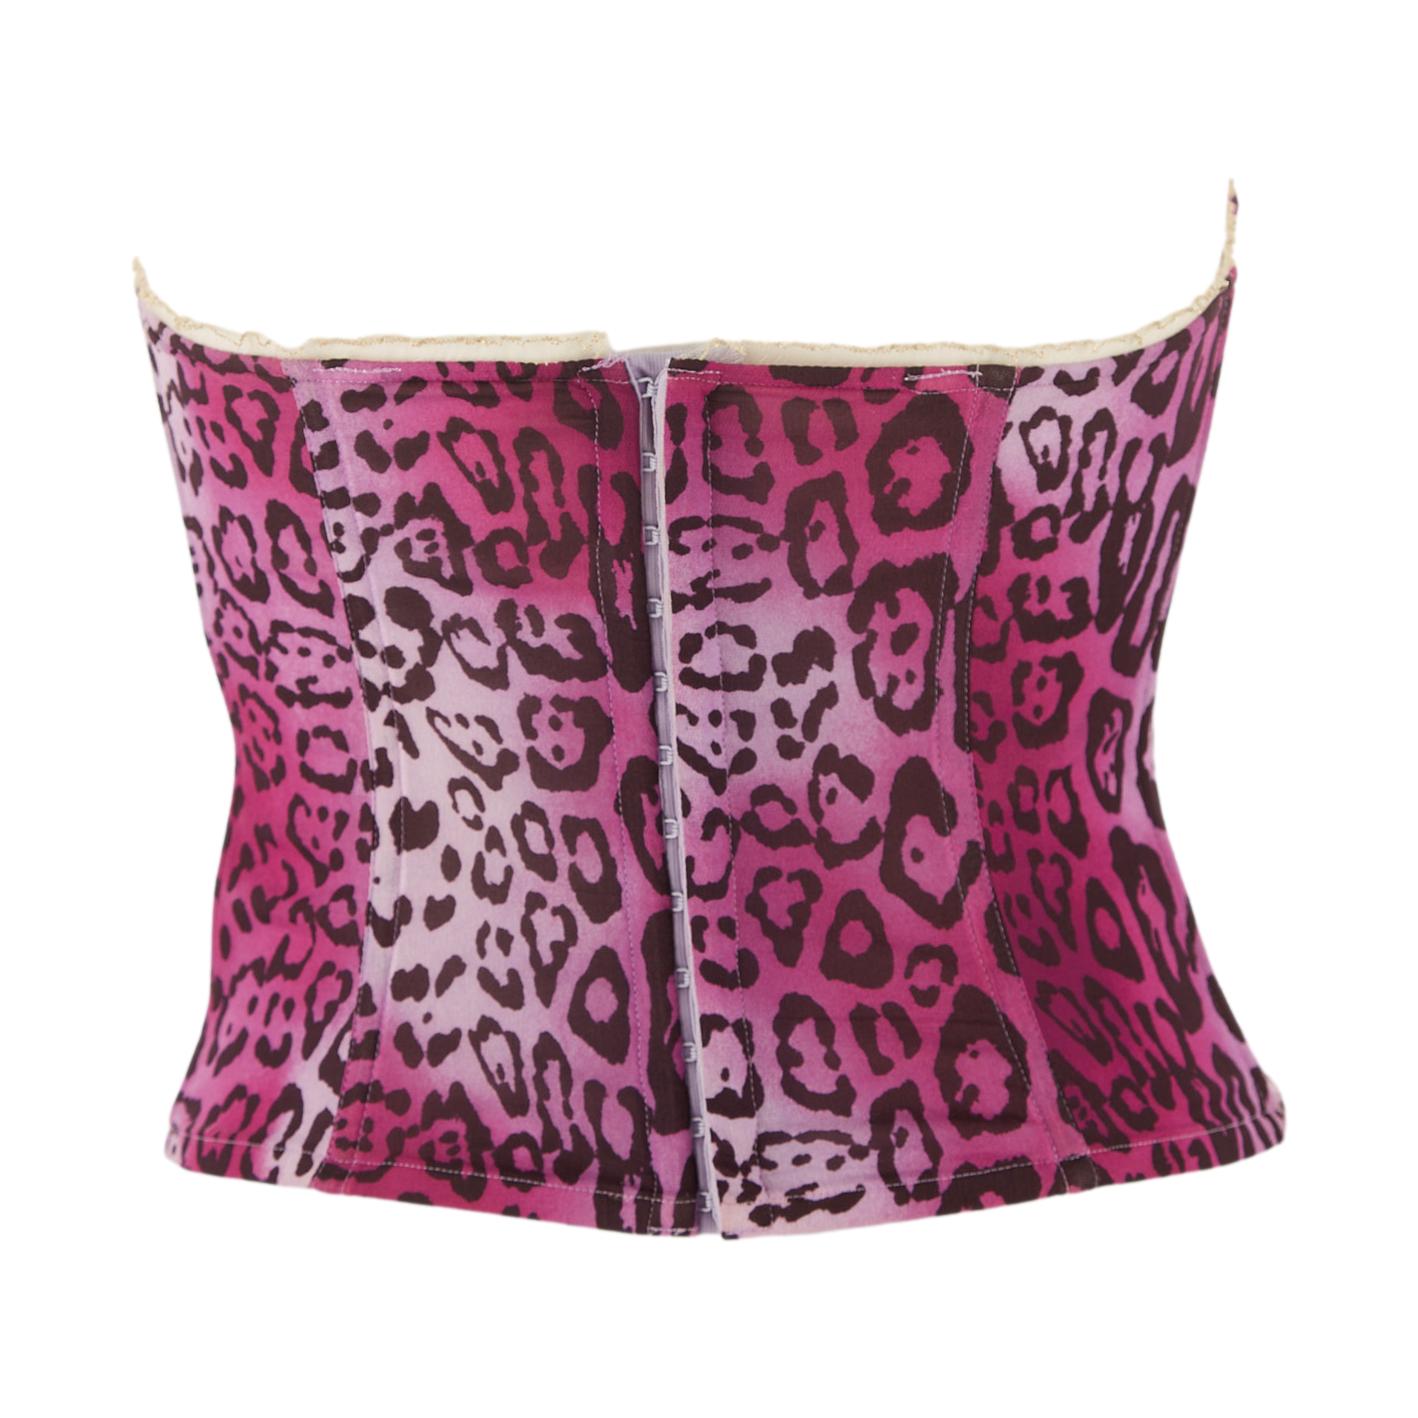 Dior Purple Cheetah Print Bustier Top